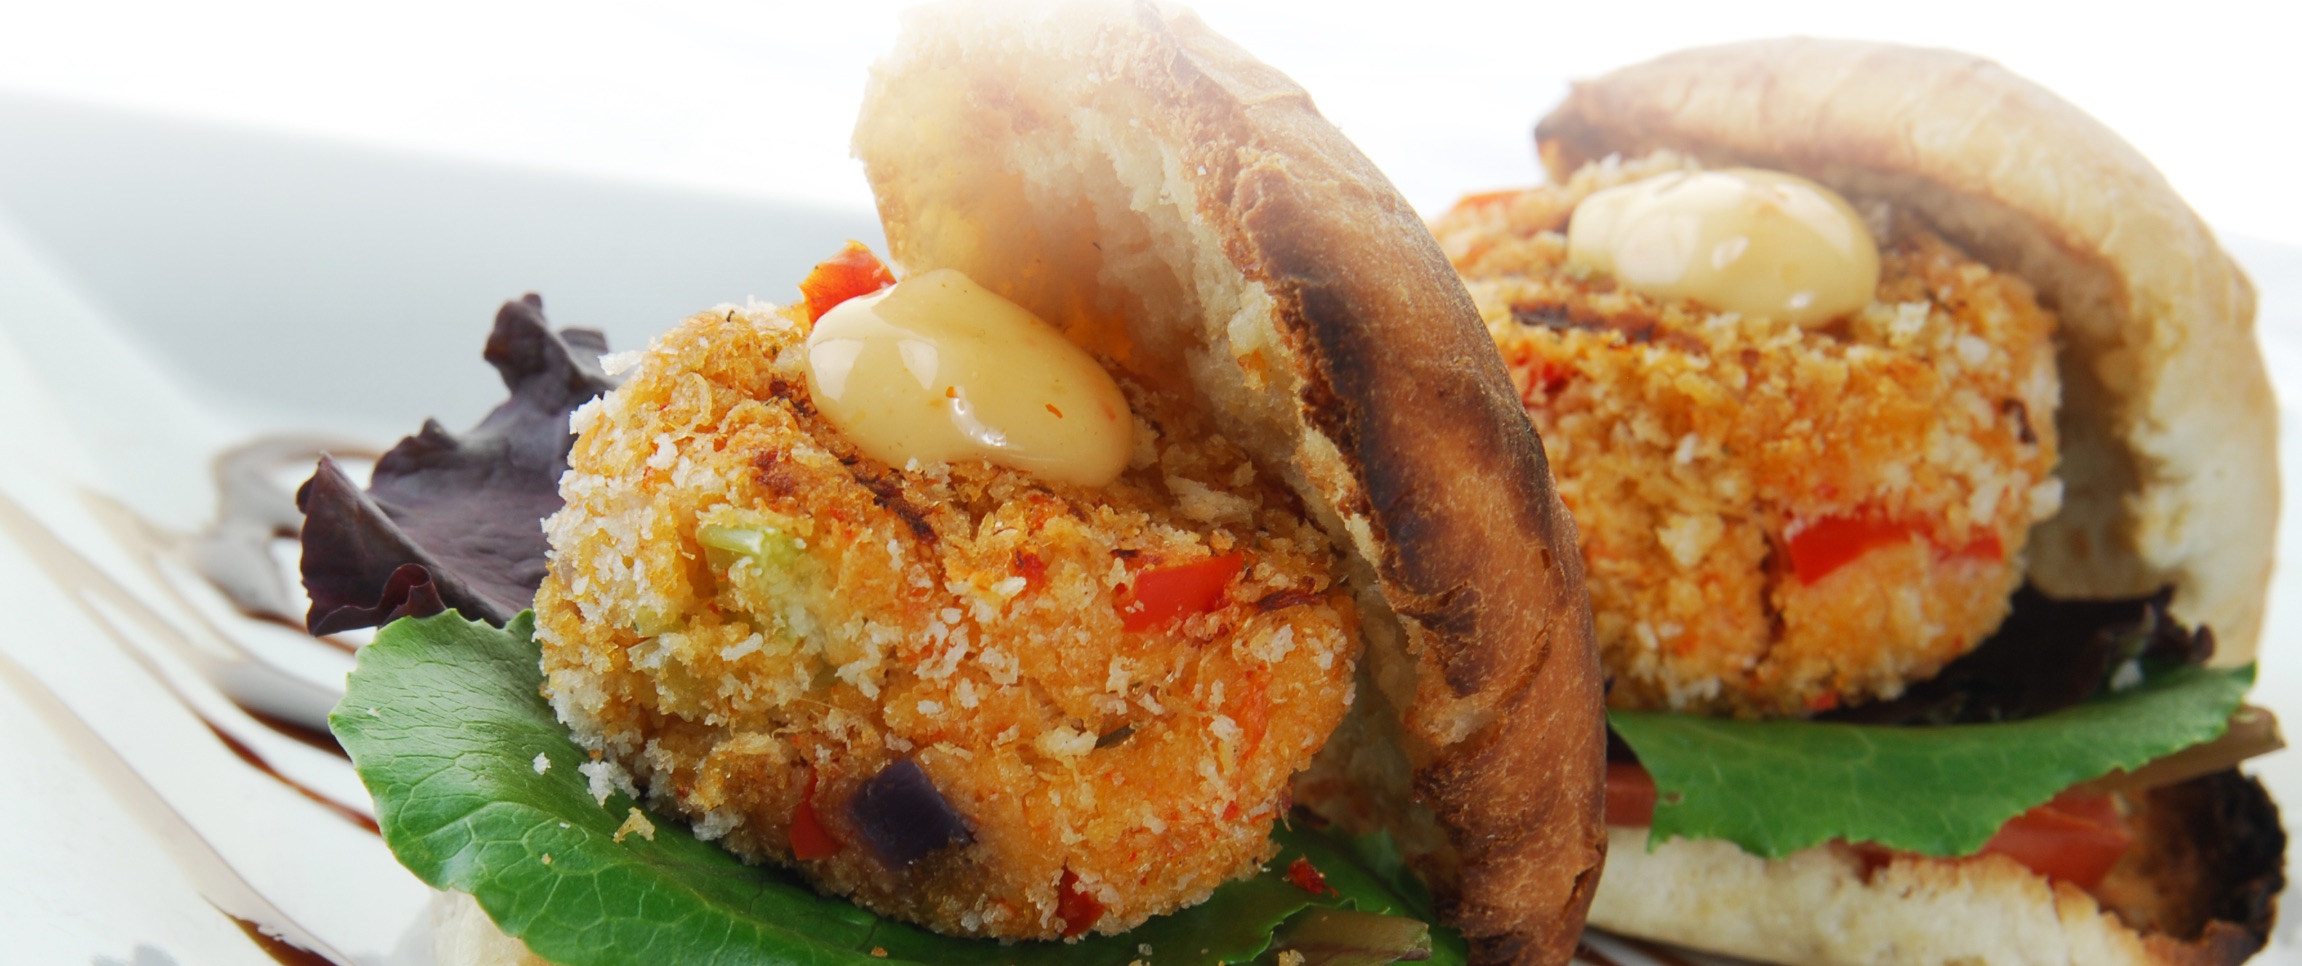 Crabcake Sandwich with Sun Dried Tomato Basil Aioli